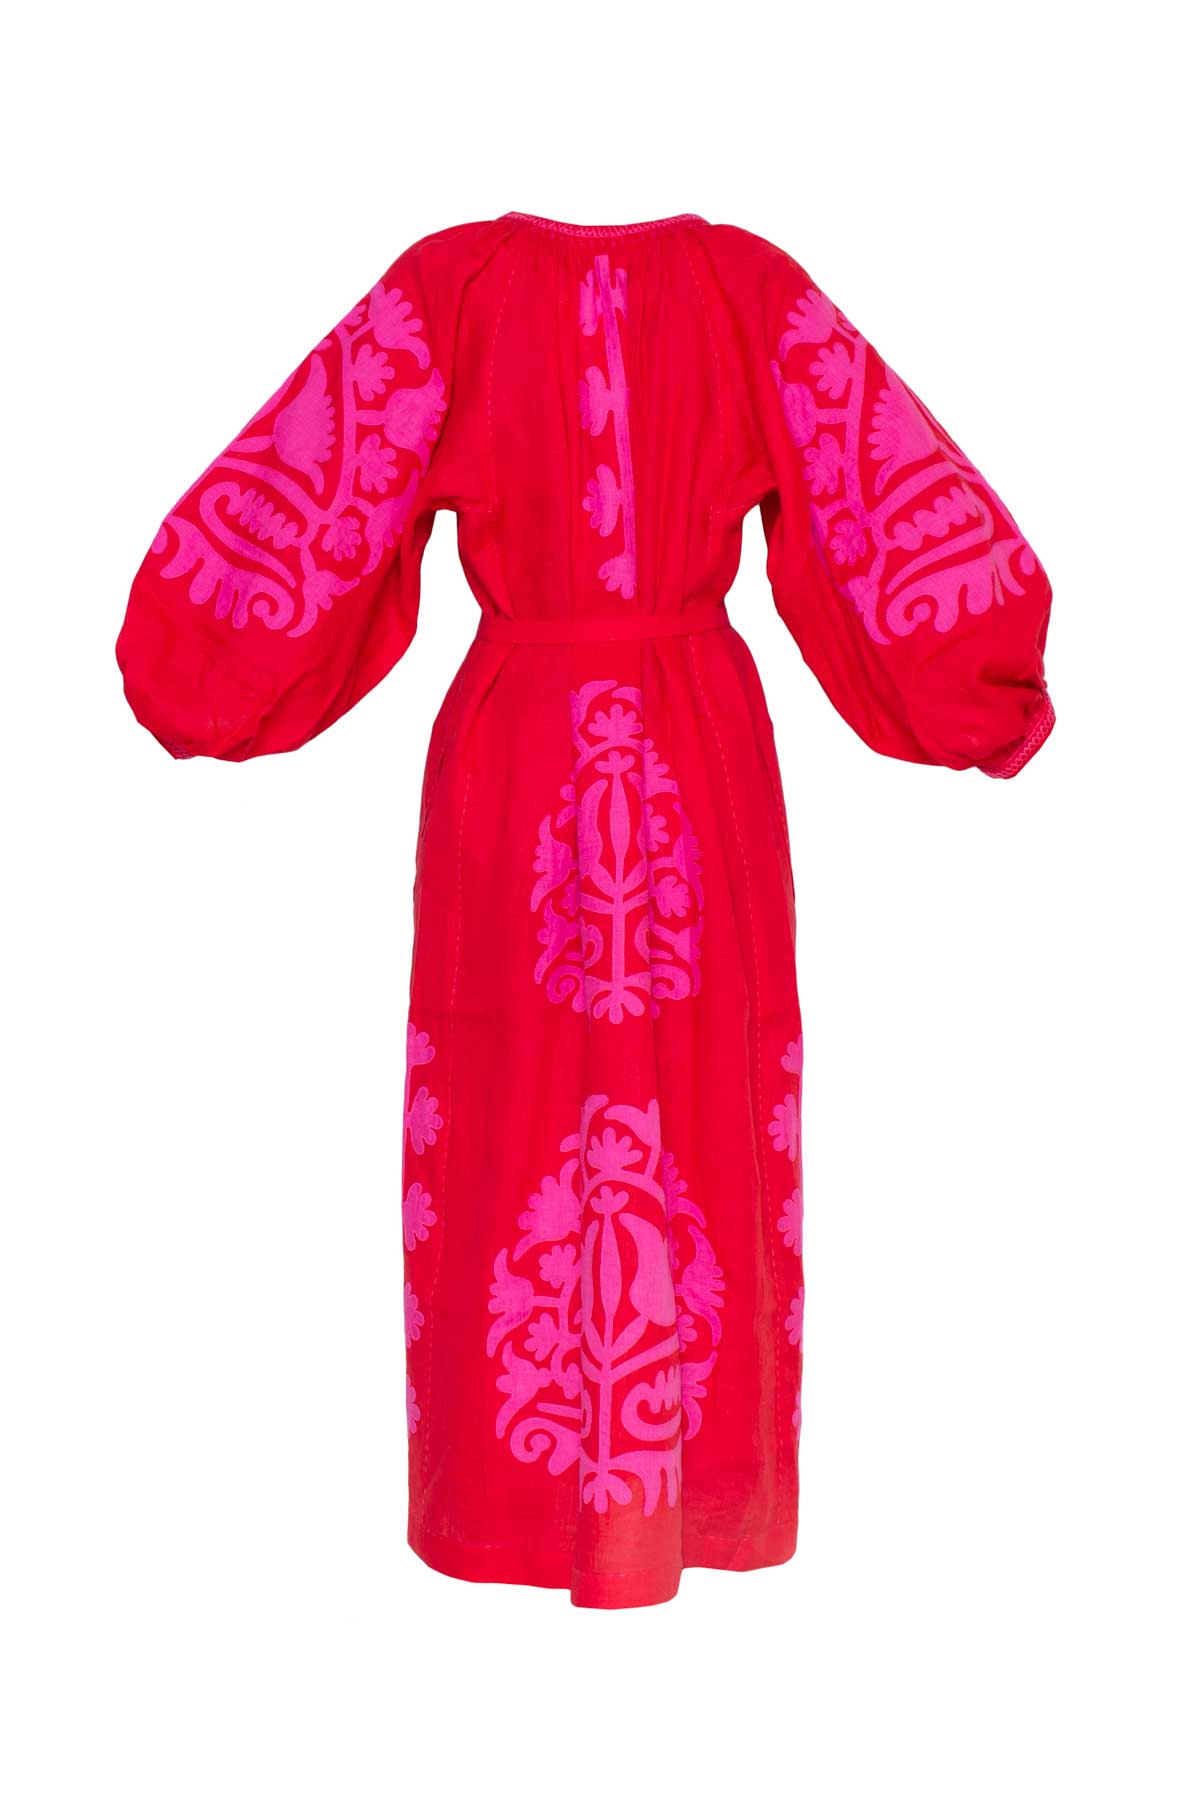 Shalimar Dress - Red & Fuchsia